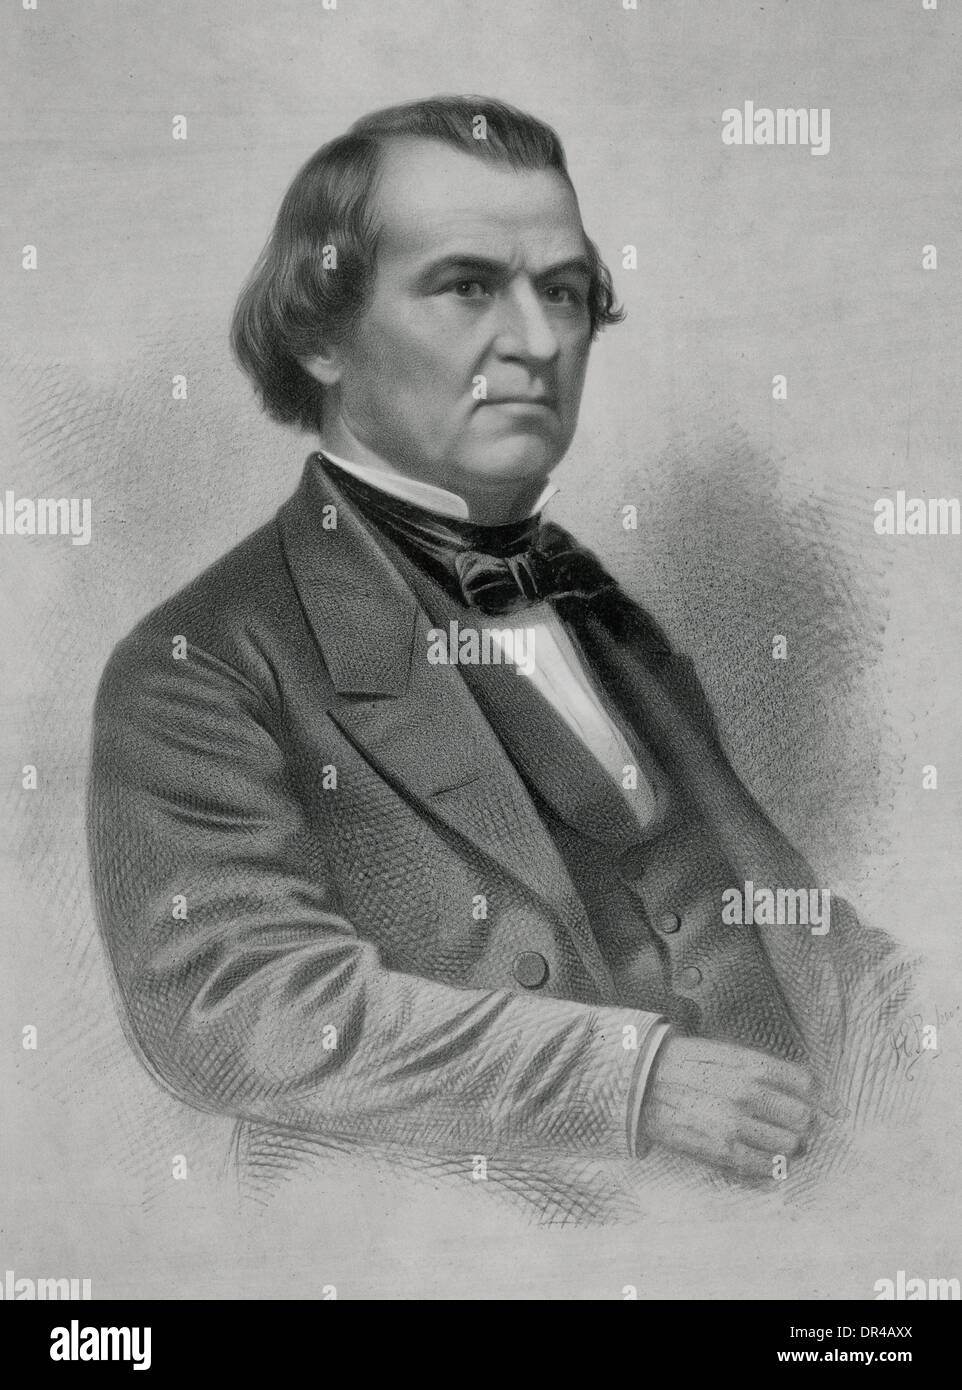 Andrew Johnson - XVII PRESIDENTE DEGLI STATI UNITI D'AMERICA 1865 - 1869 Foto Stock